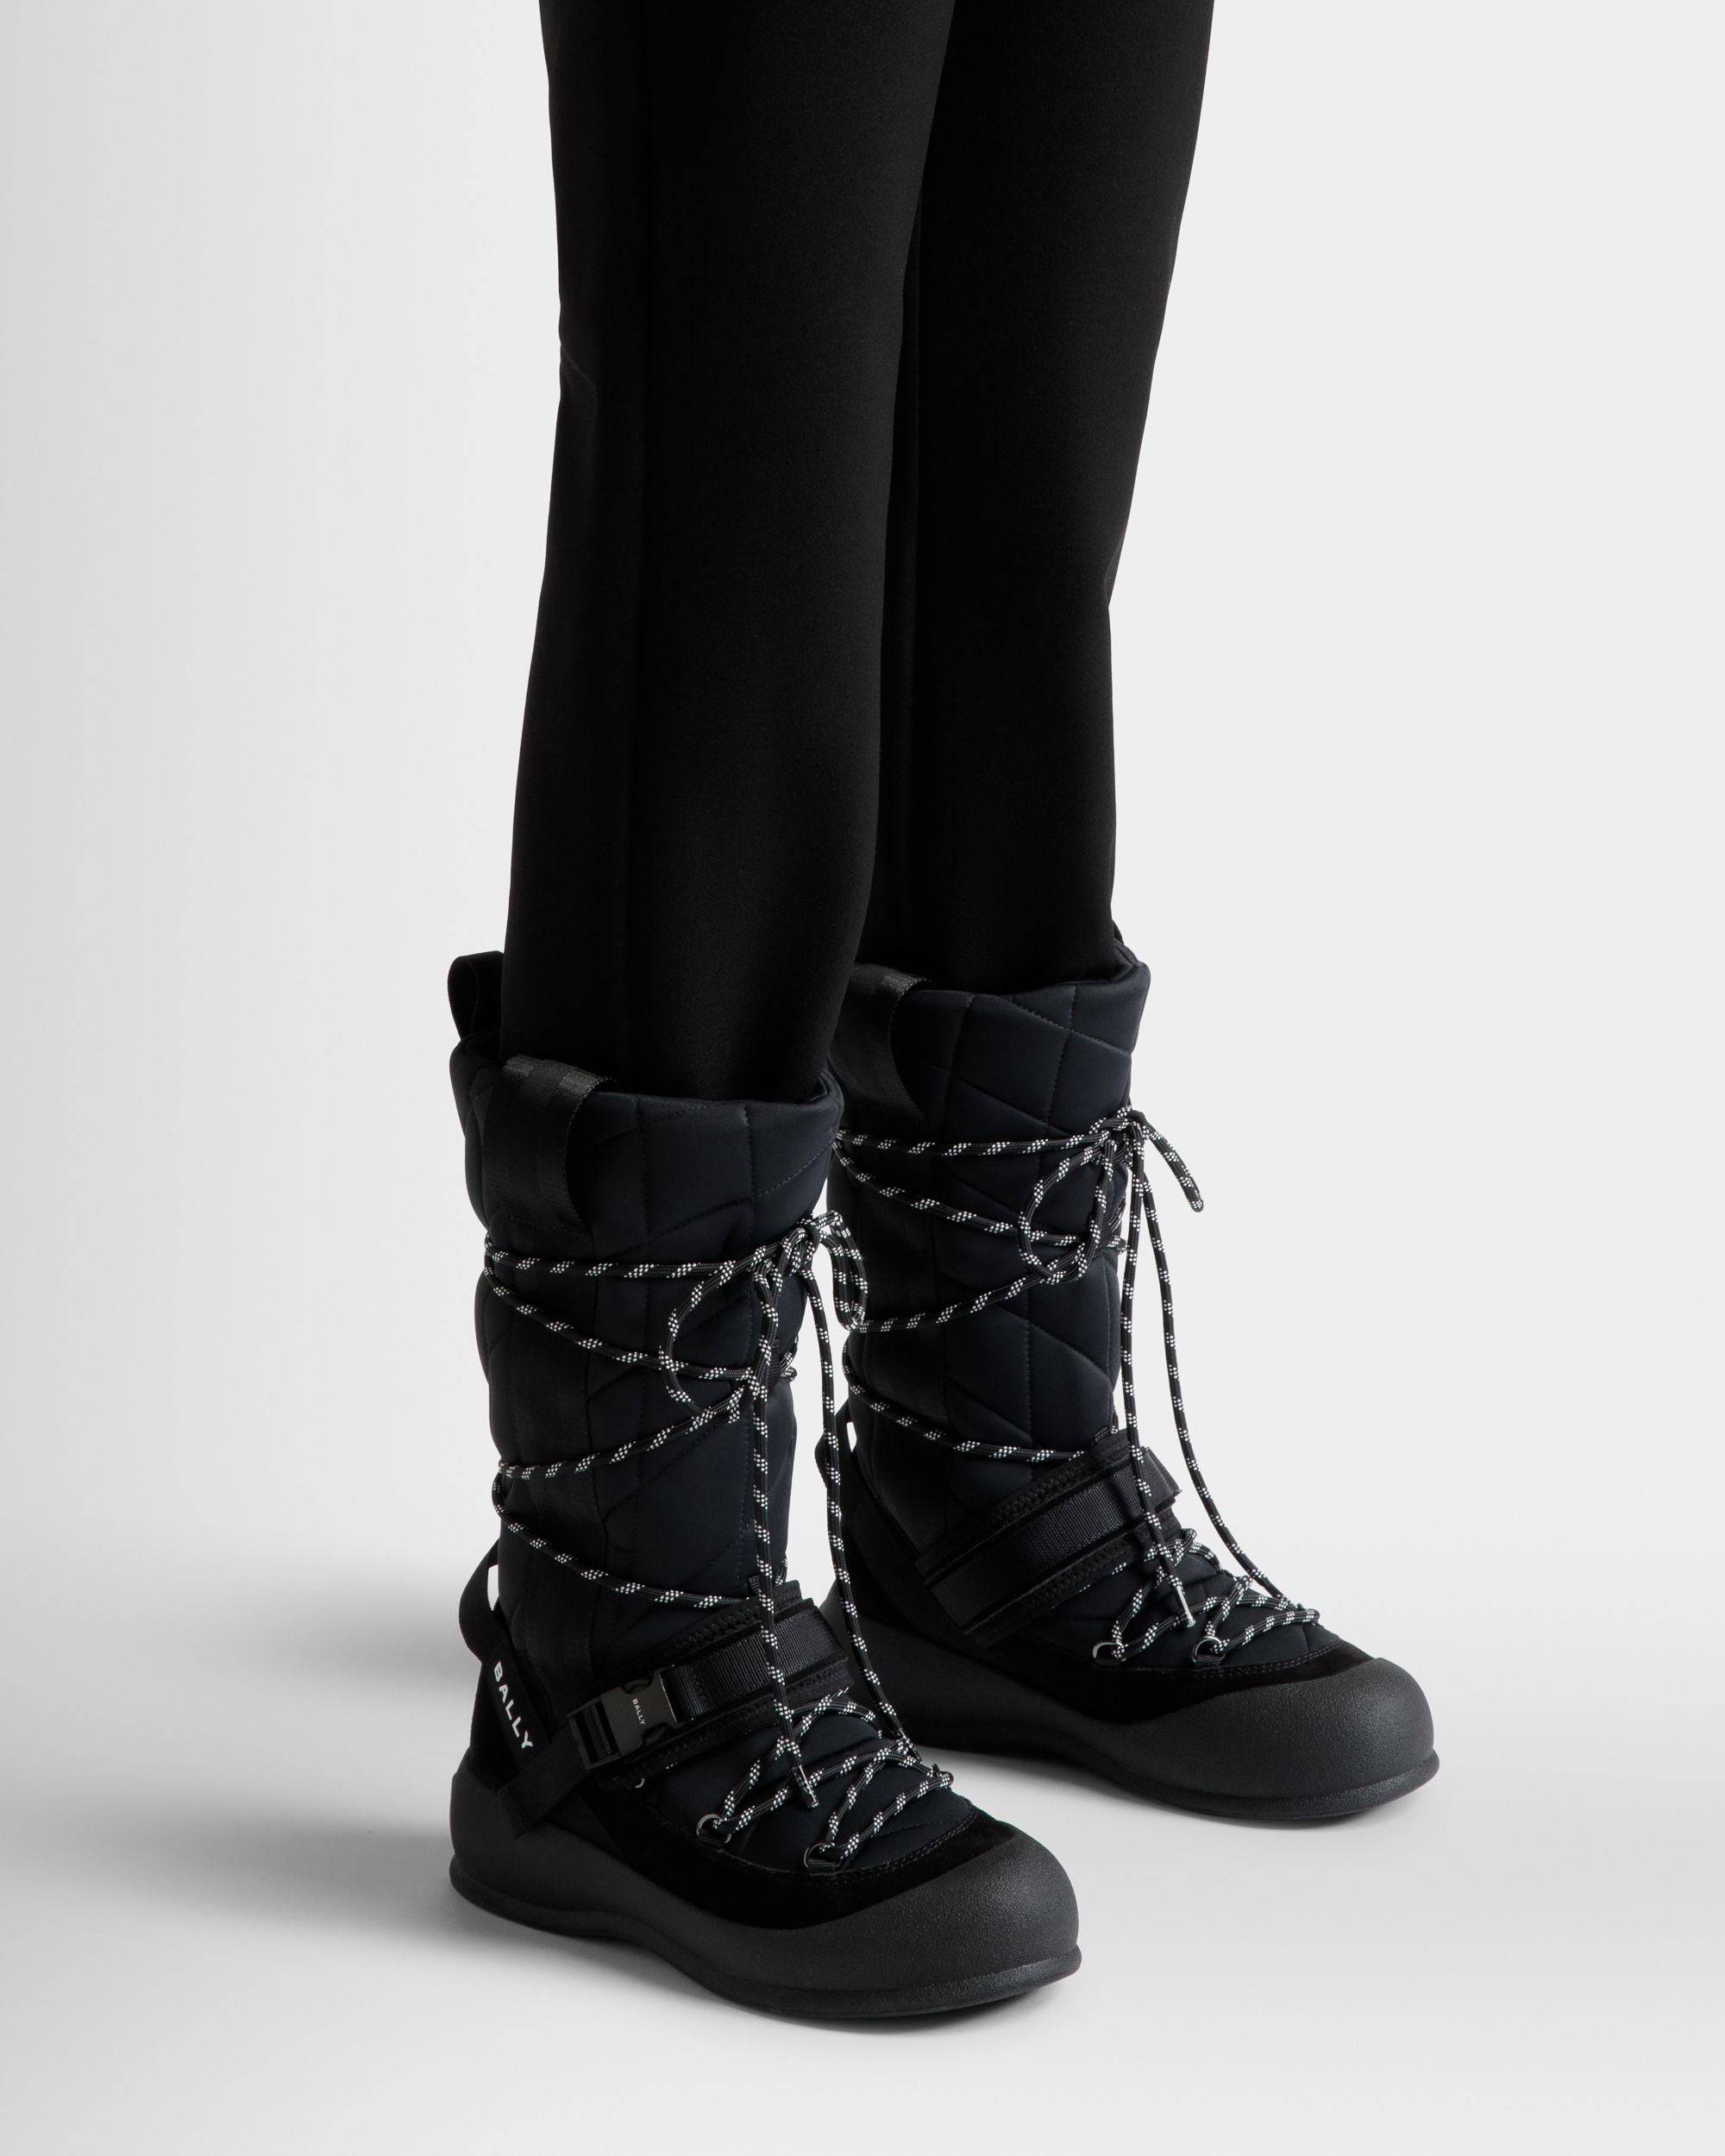 Frei | Women's Boot in Black Nylon | Bally | On Model Close Up